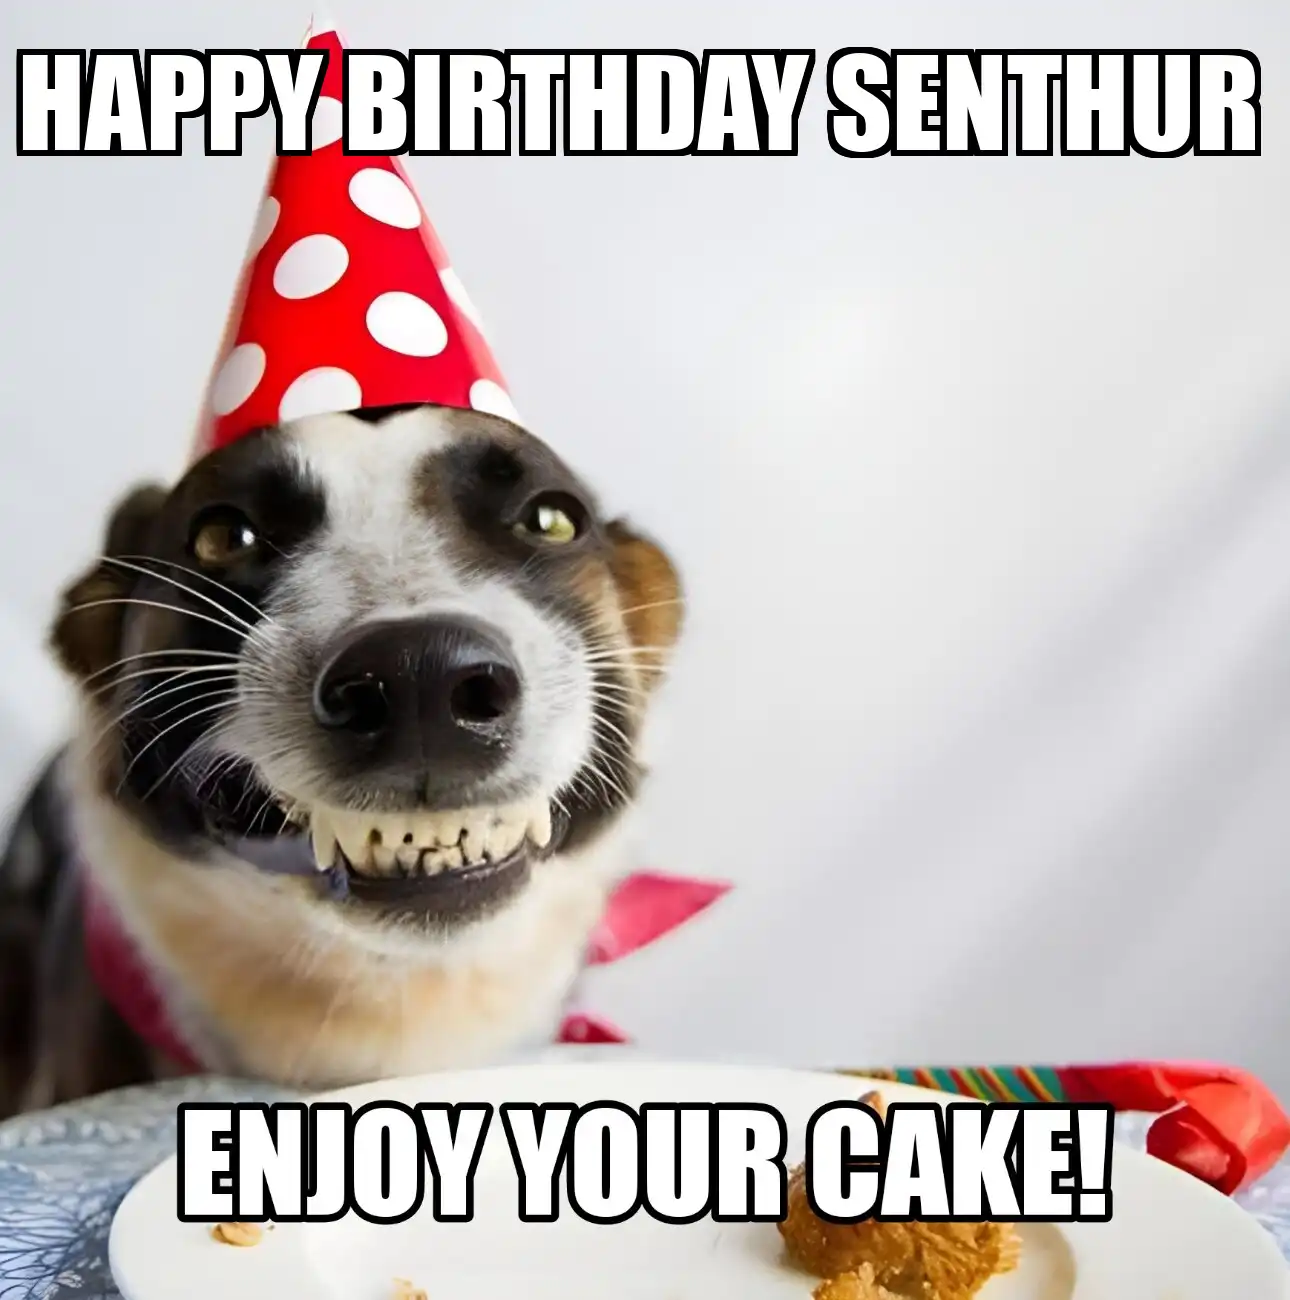 Happy Birthday Senthur Enjoy Your Cake Dog Meme